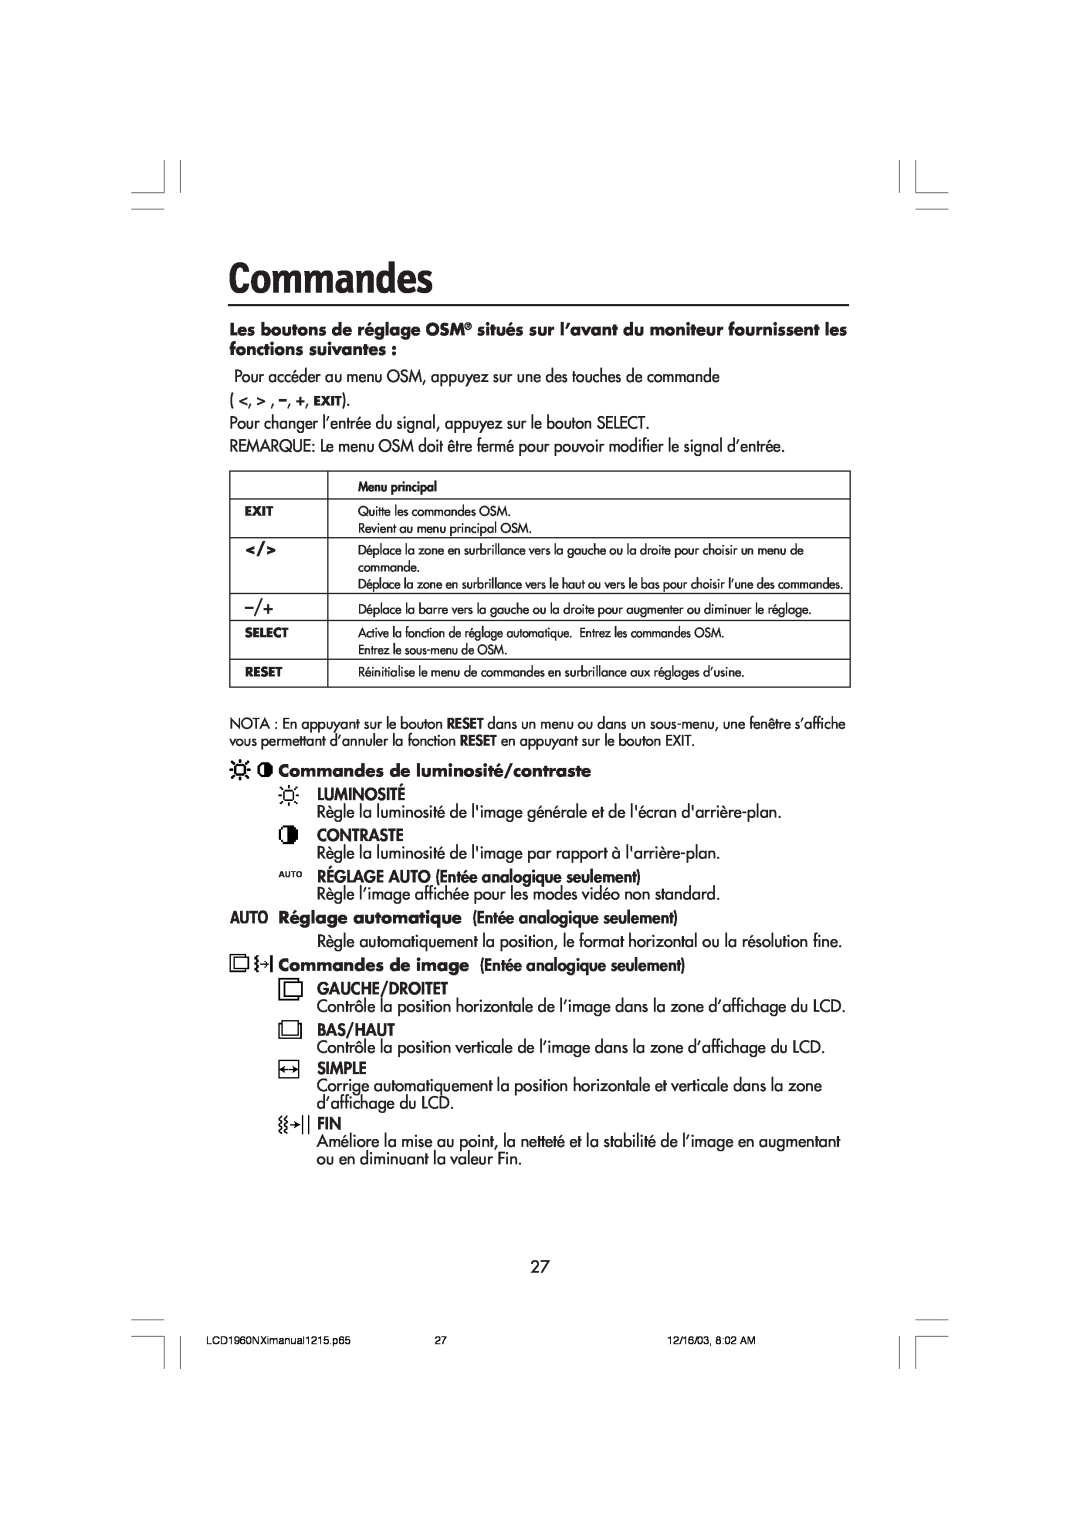 NEC LCD1960NXI manual Commandes de luminosité/contraste 